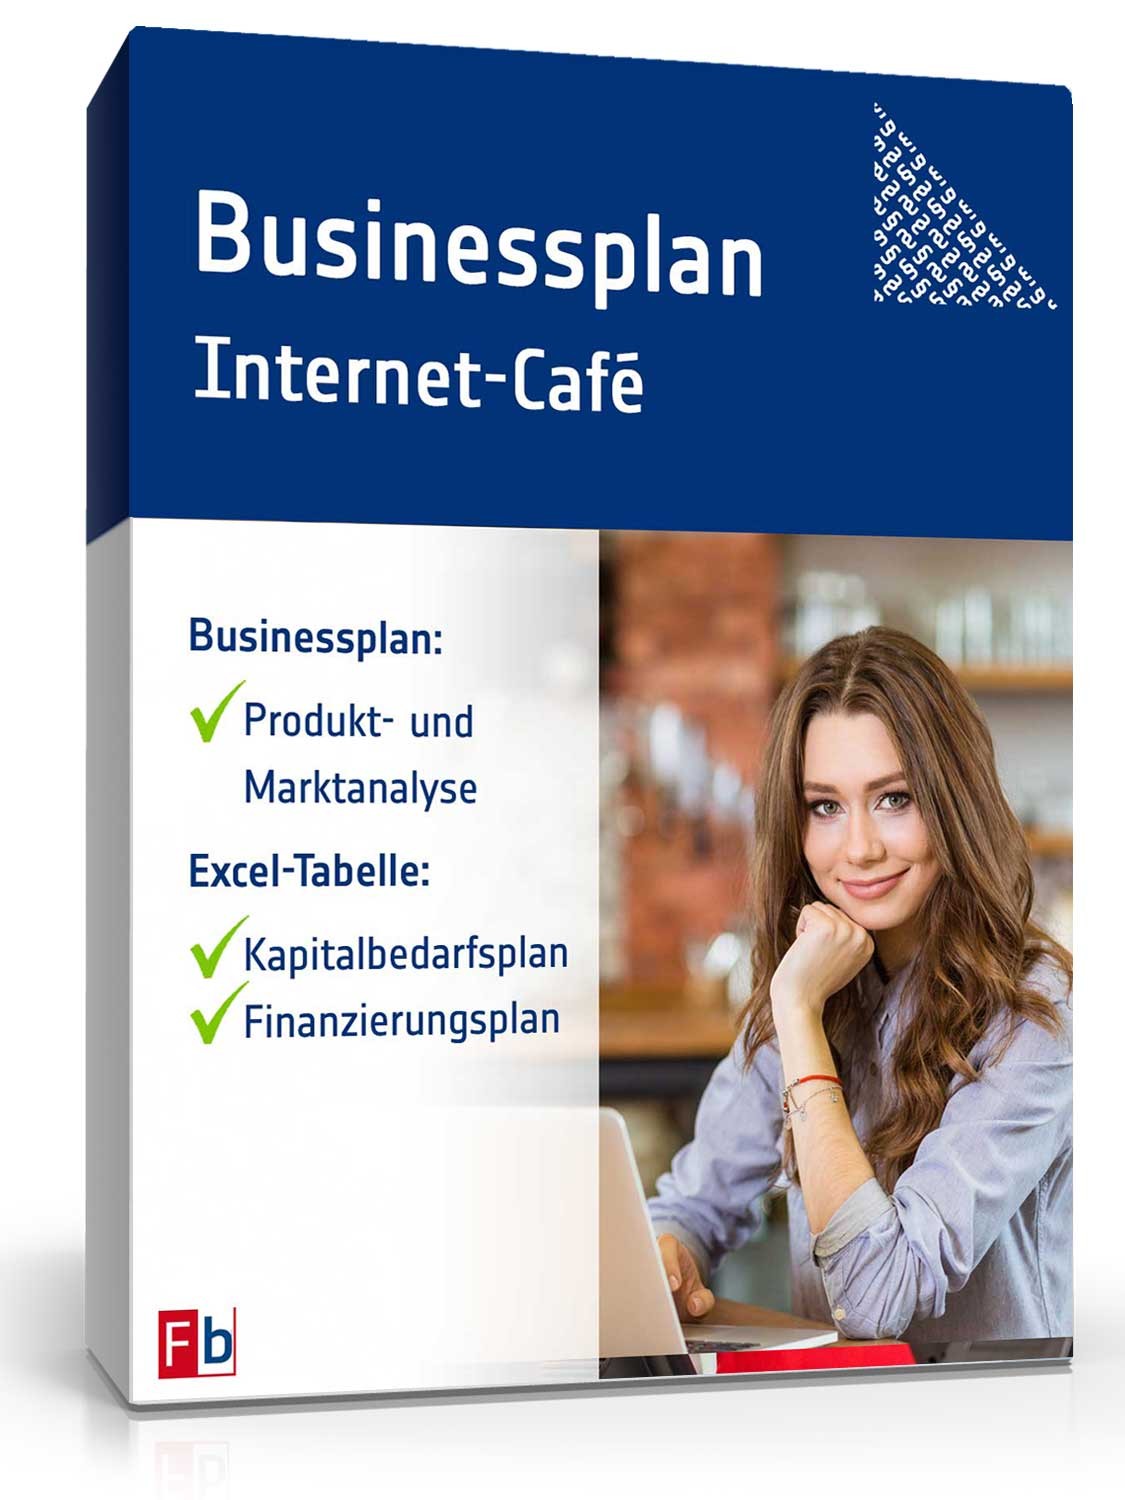 Hauptbild des Produkts: Businessplan Internetcafé